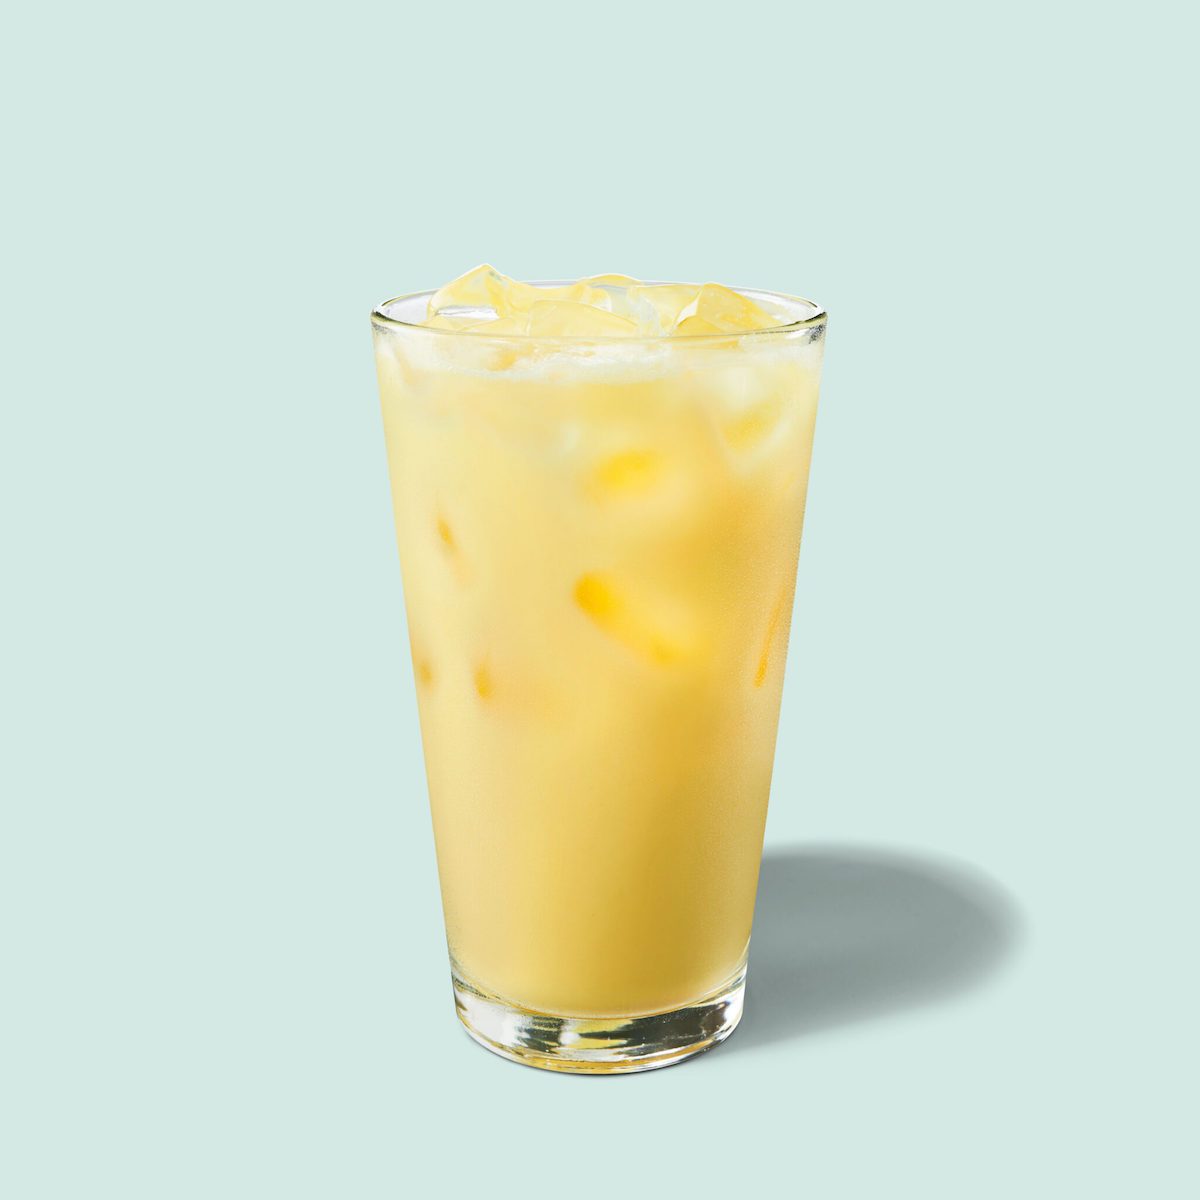 how much caffeine is in starbucks pineapple matcha drink